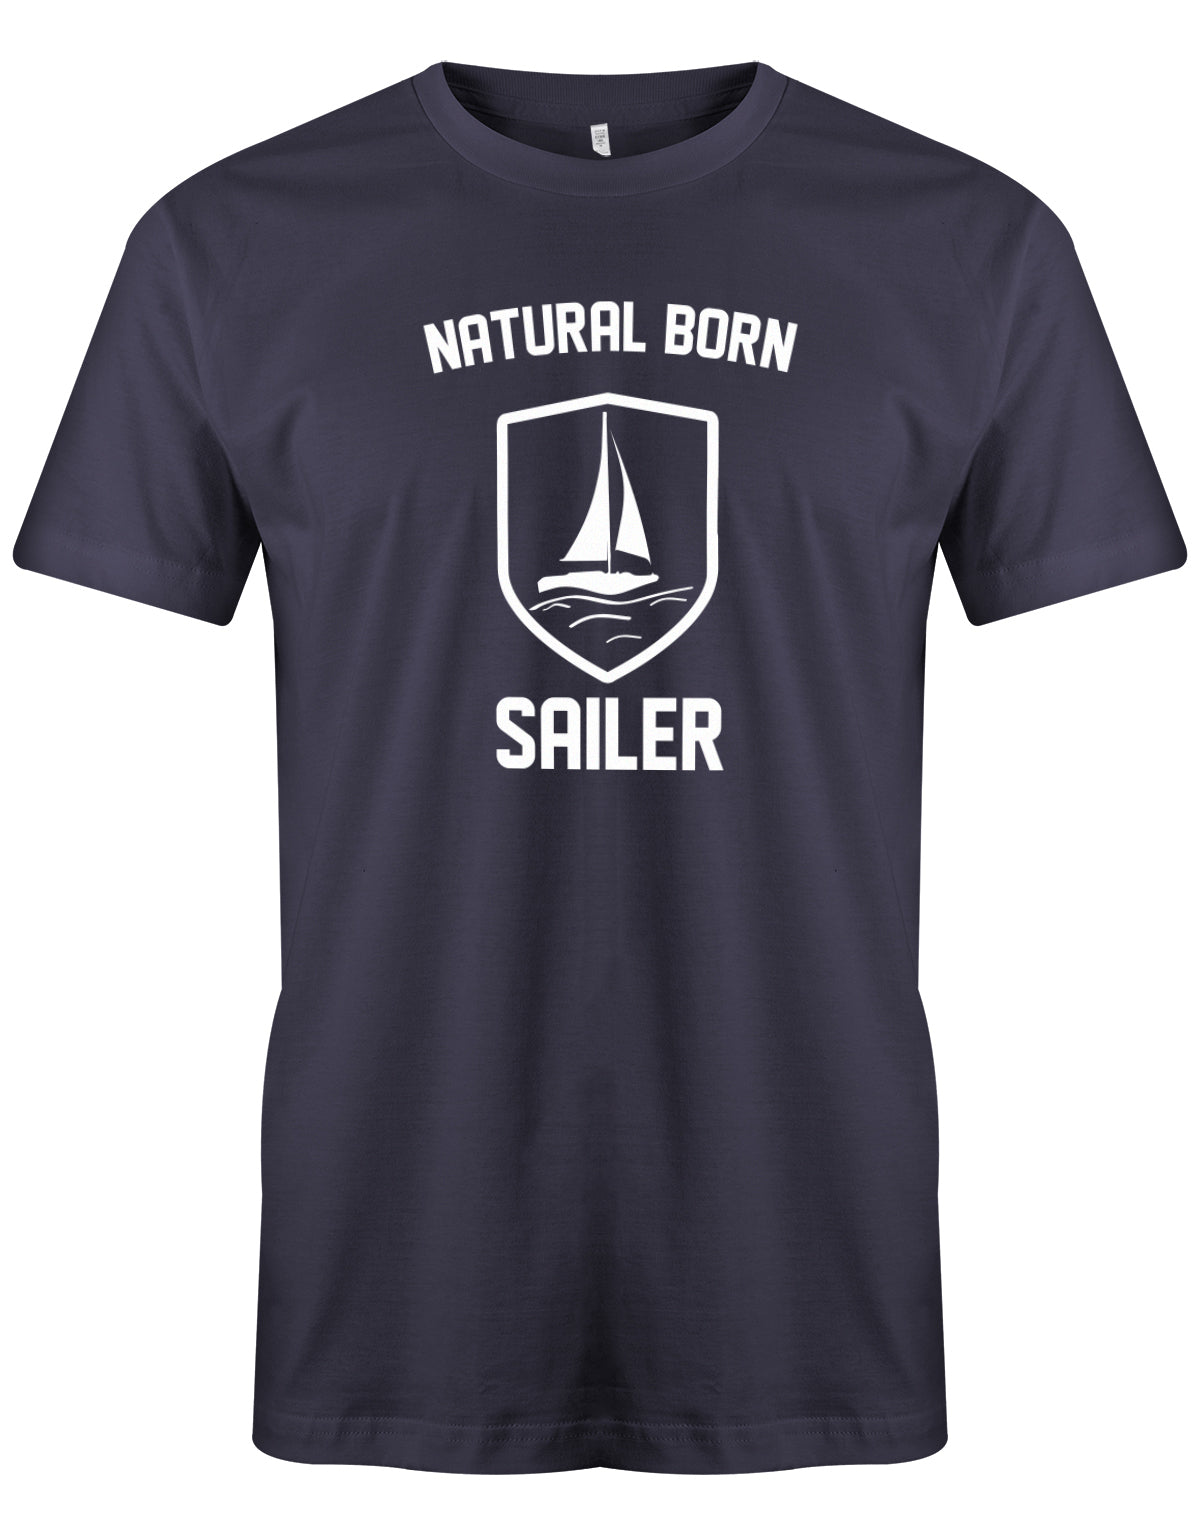 Das Segler t-shirt bedruckt mit "Natural born Sailer - Der geborene Segler". Navy